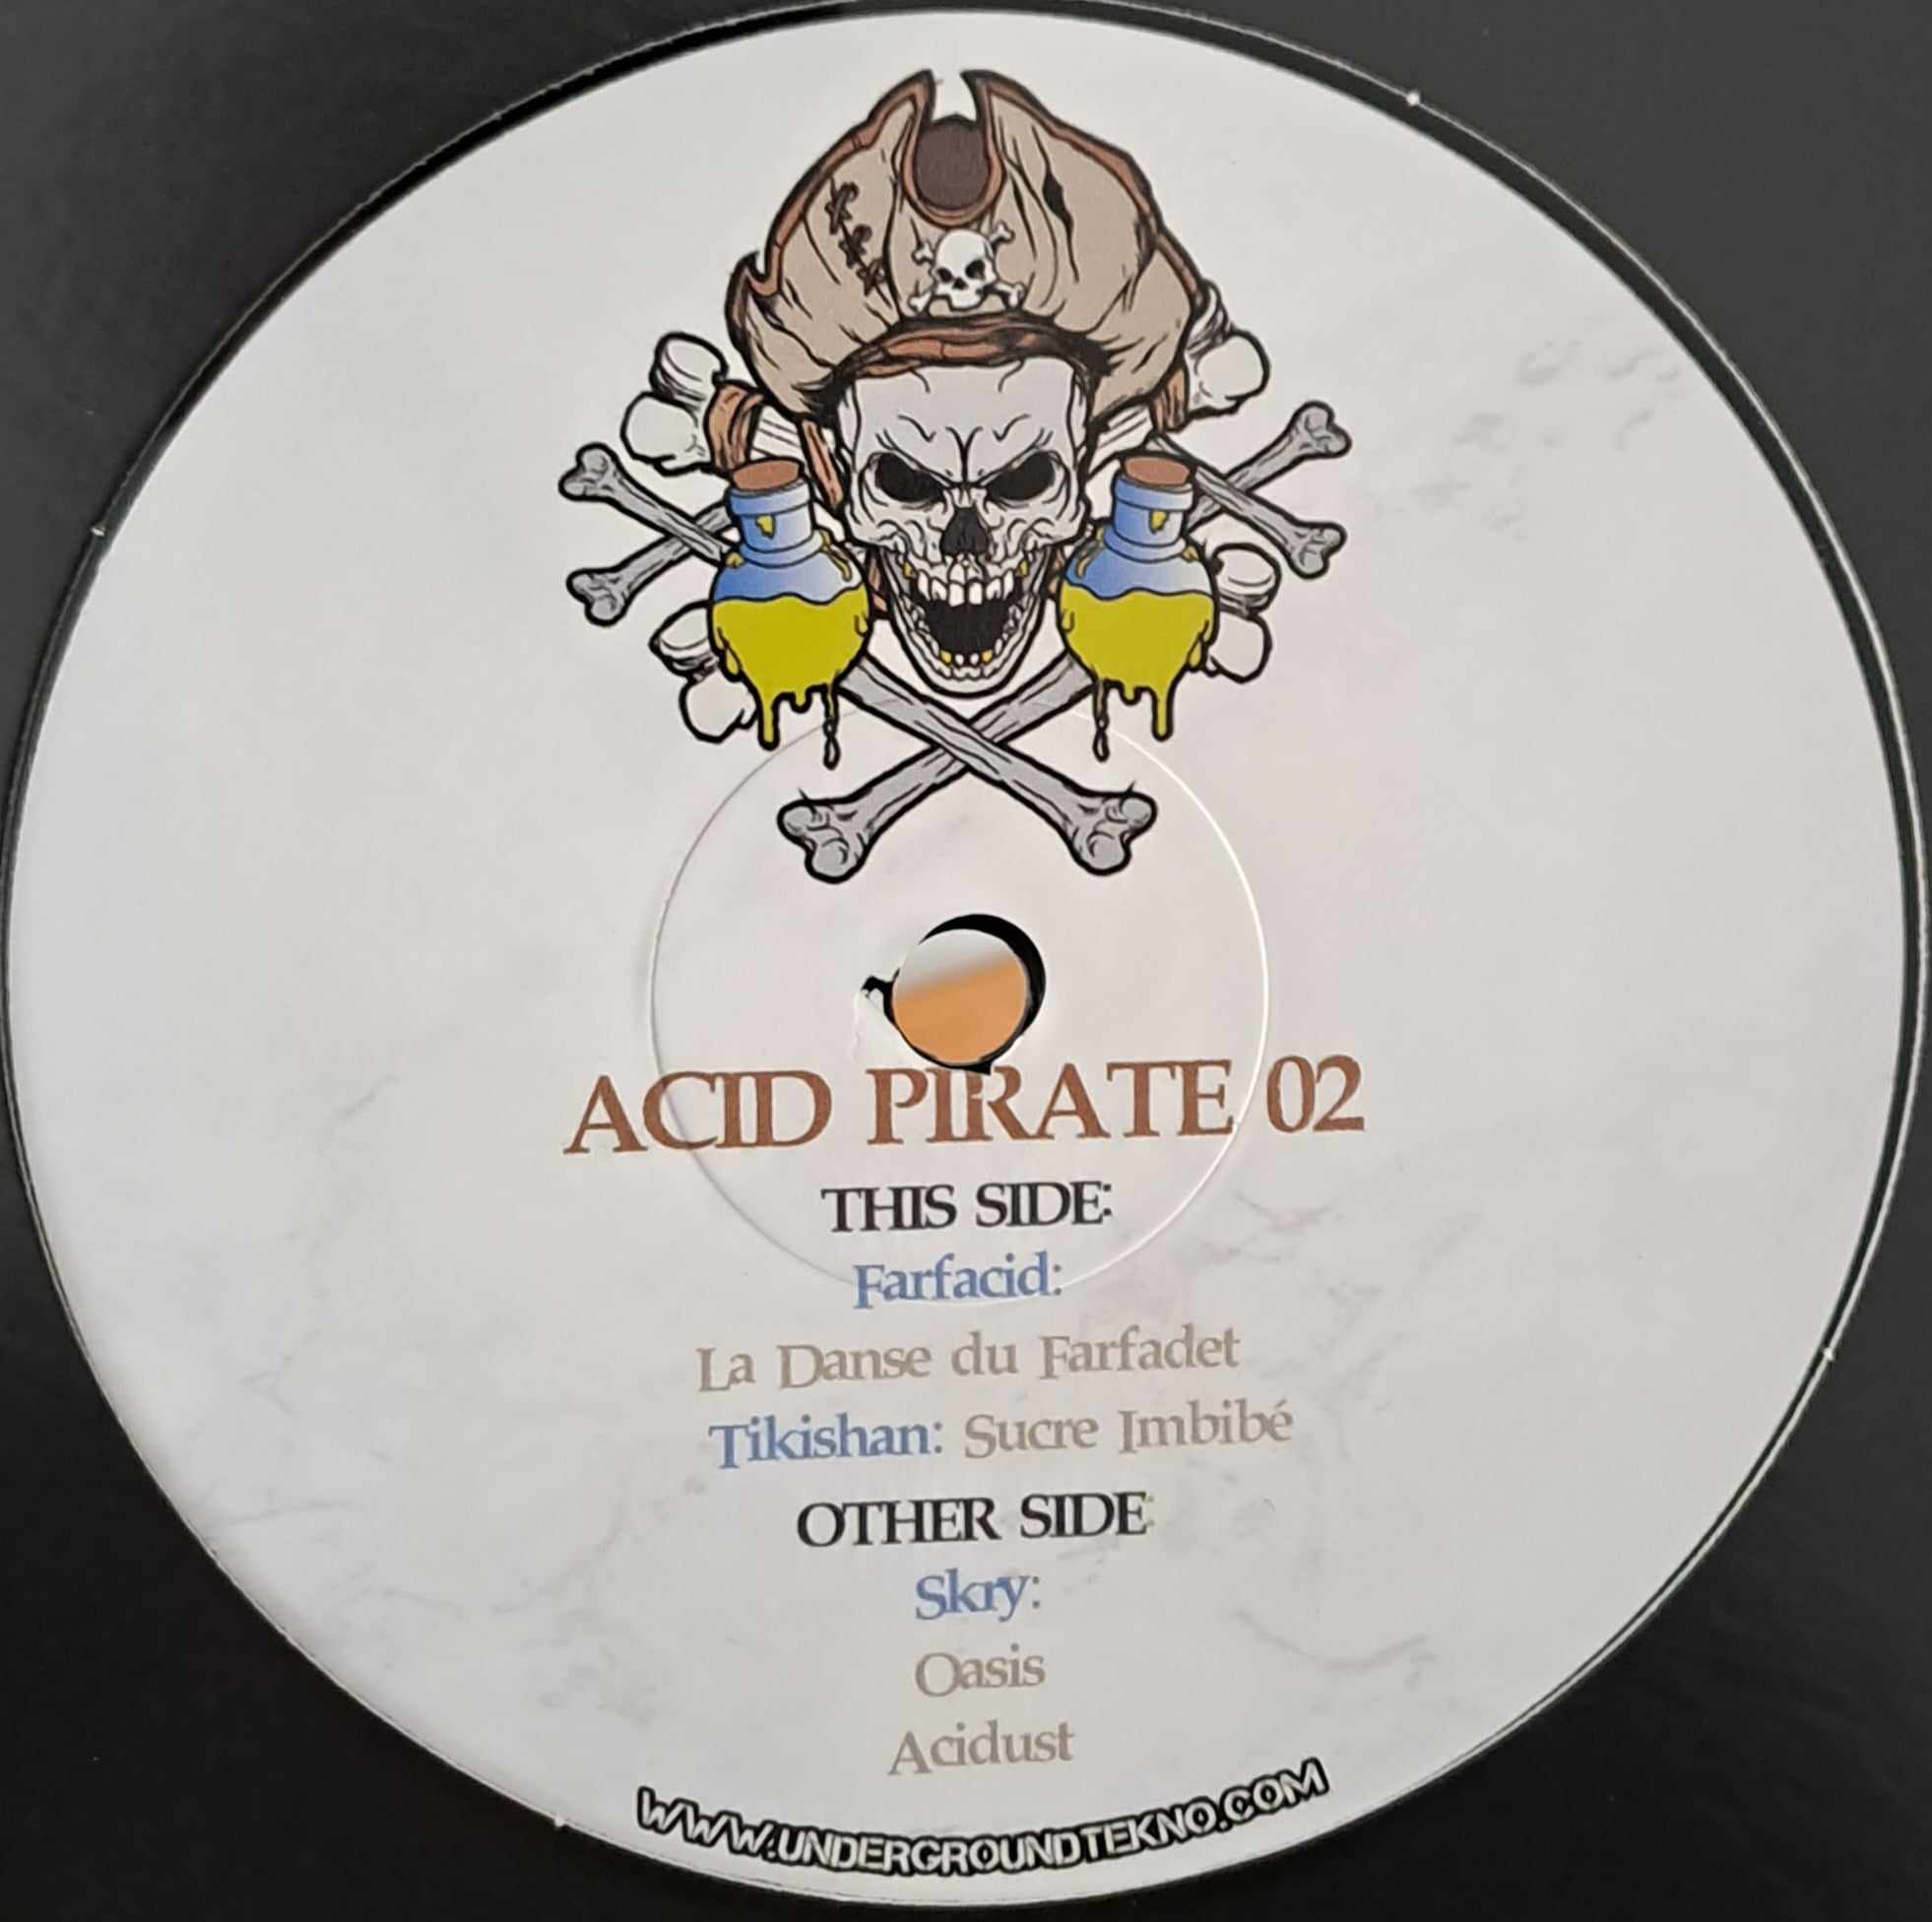 Acid Pirate 02 (RP2023) - vinyle acidcore